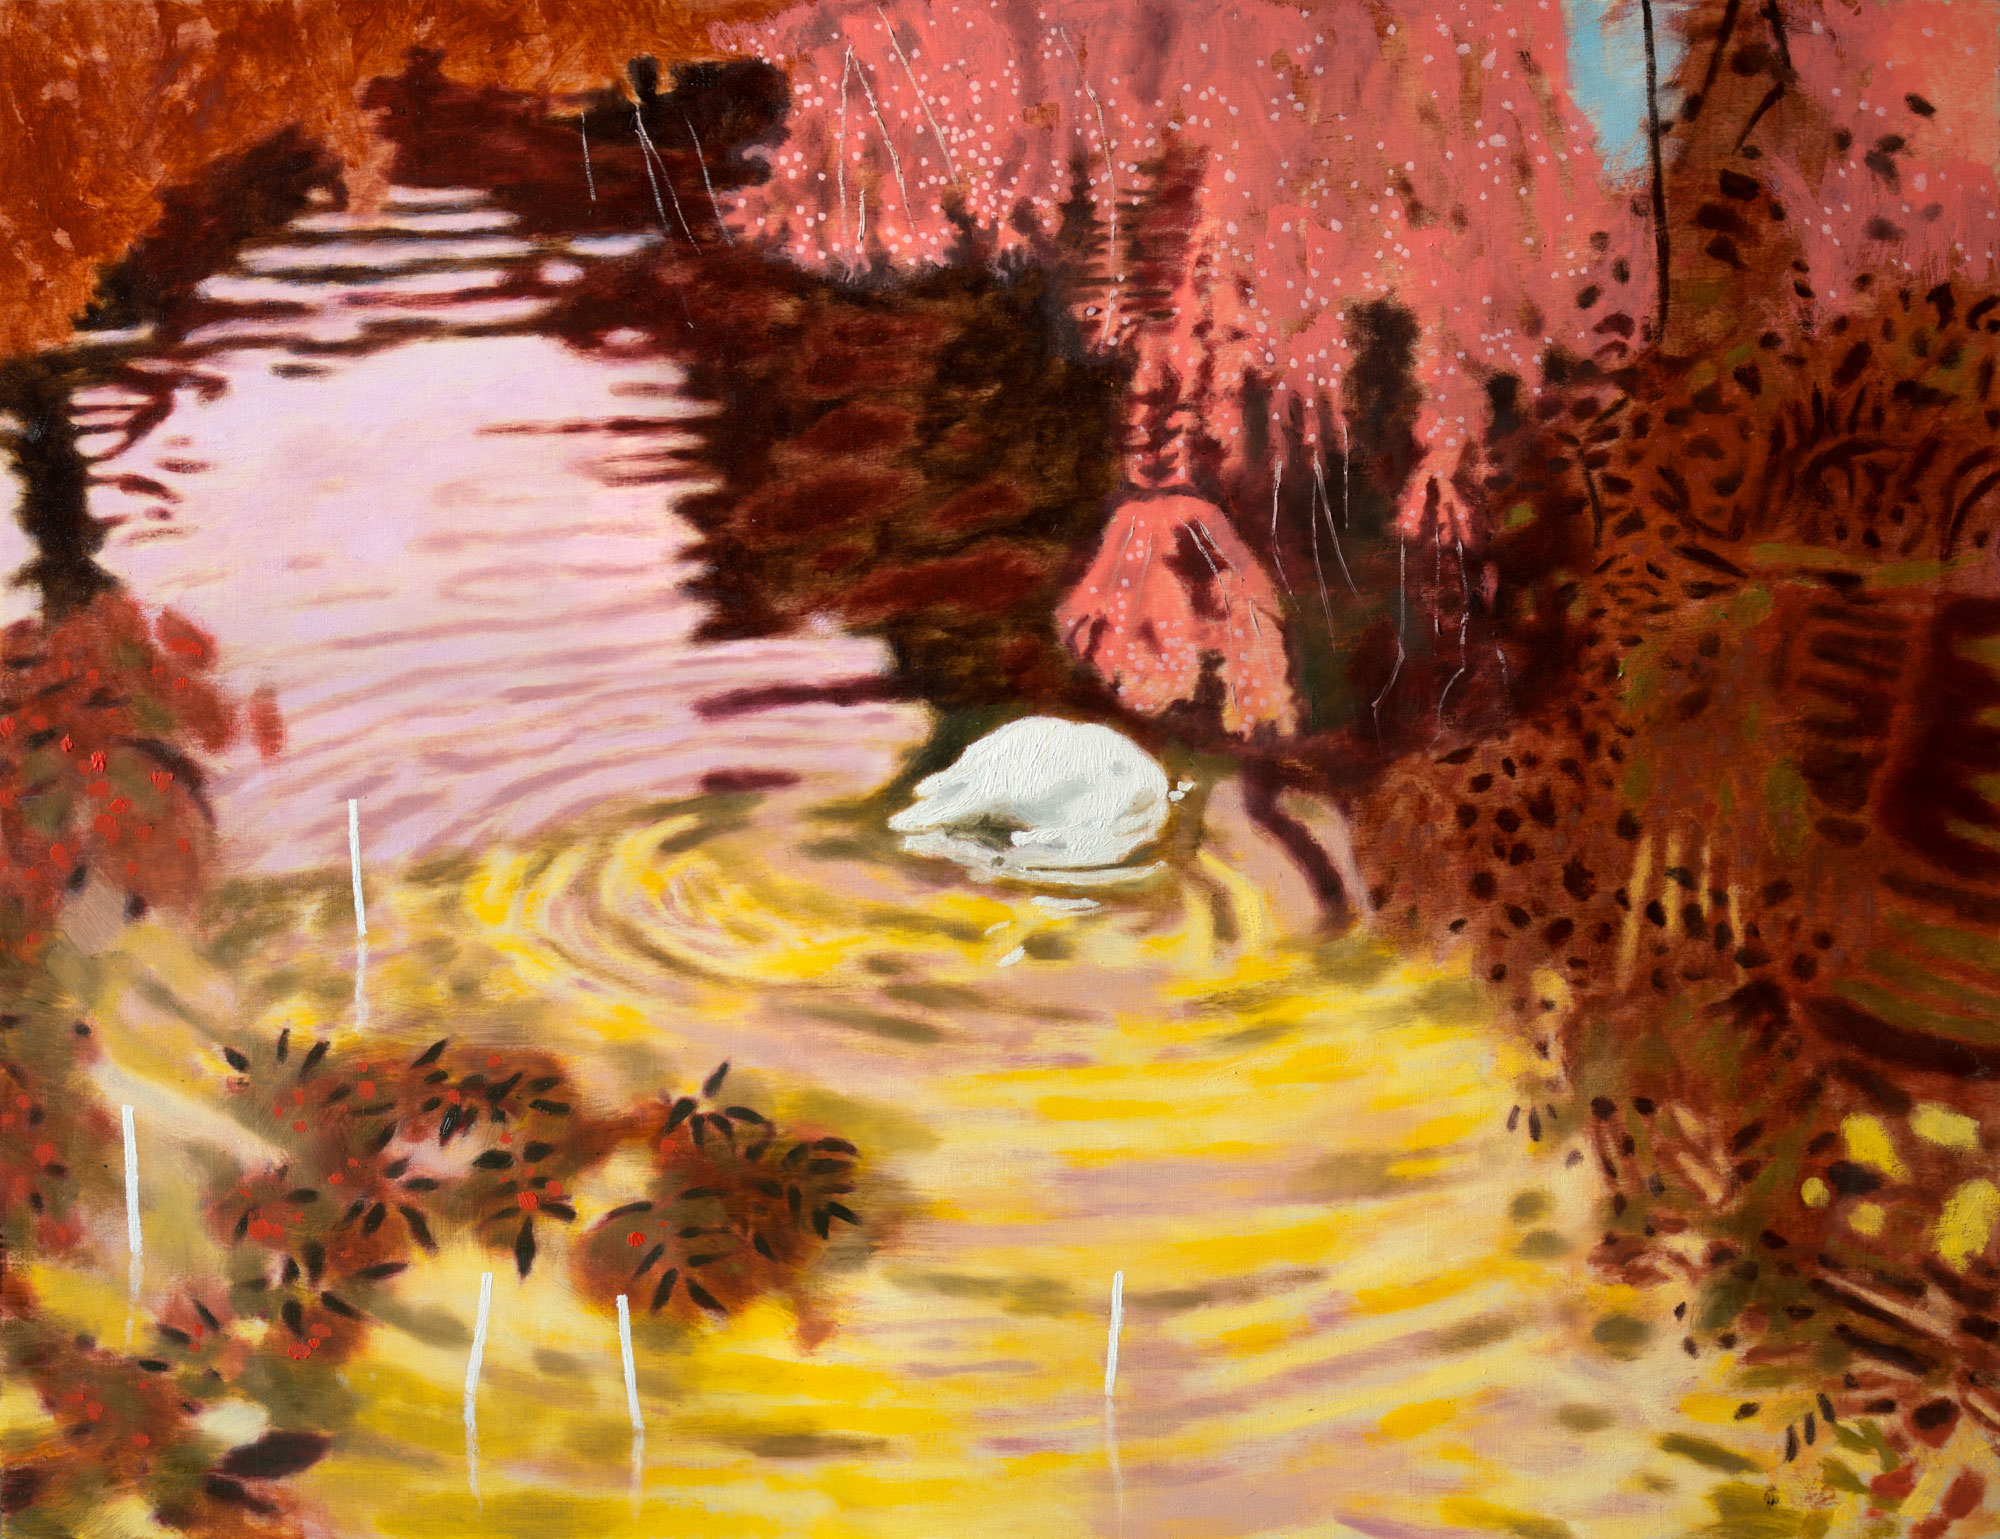 Karolina Orzełek, "Down by the water IV", 2019, 65 x 50 cm, oil on panel